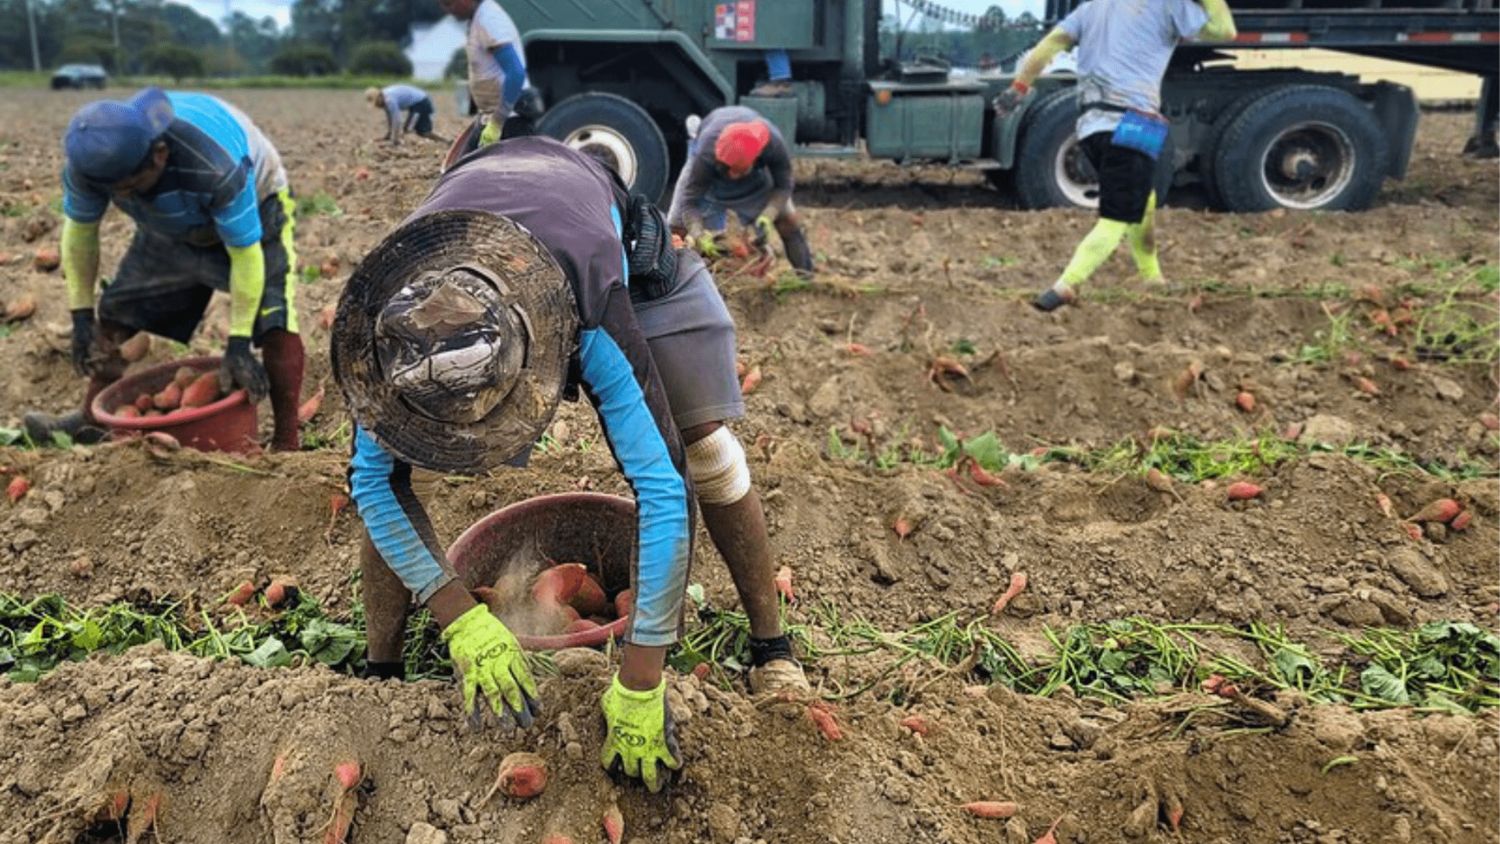 Farmworkers pulling up sweetpotatoes in a field